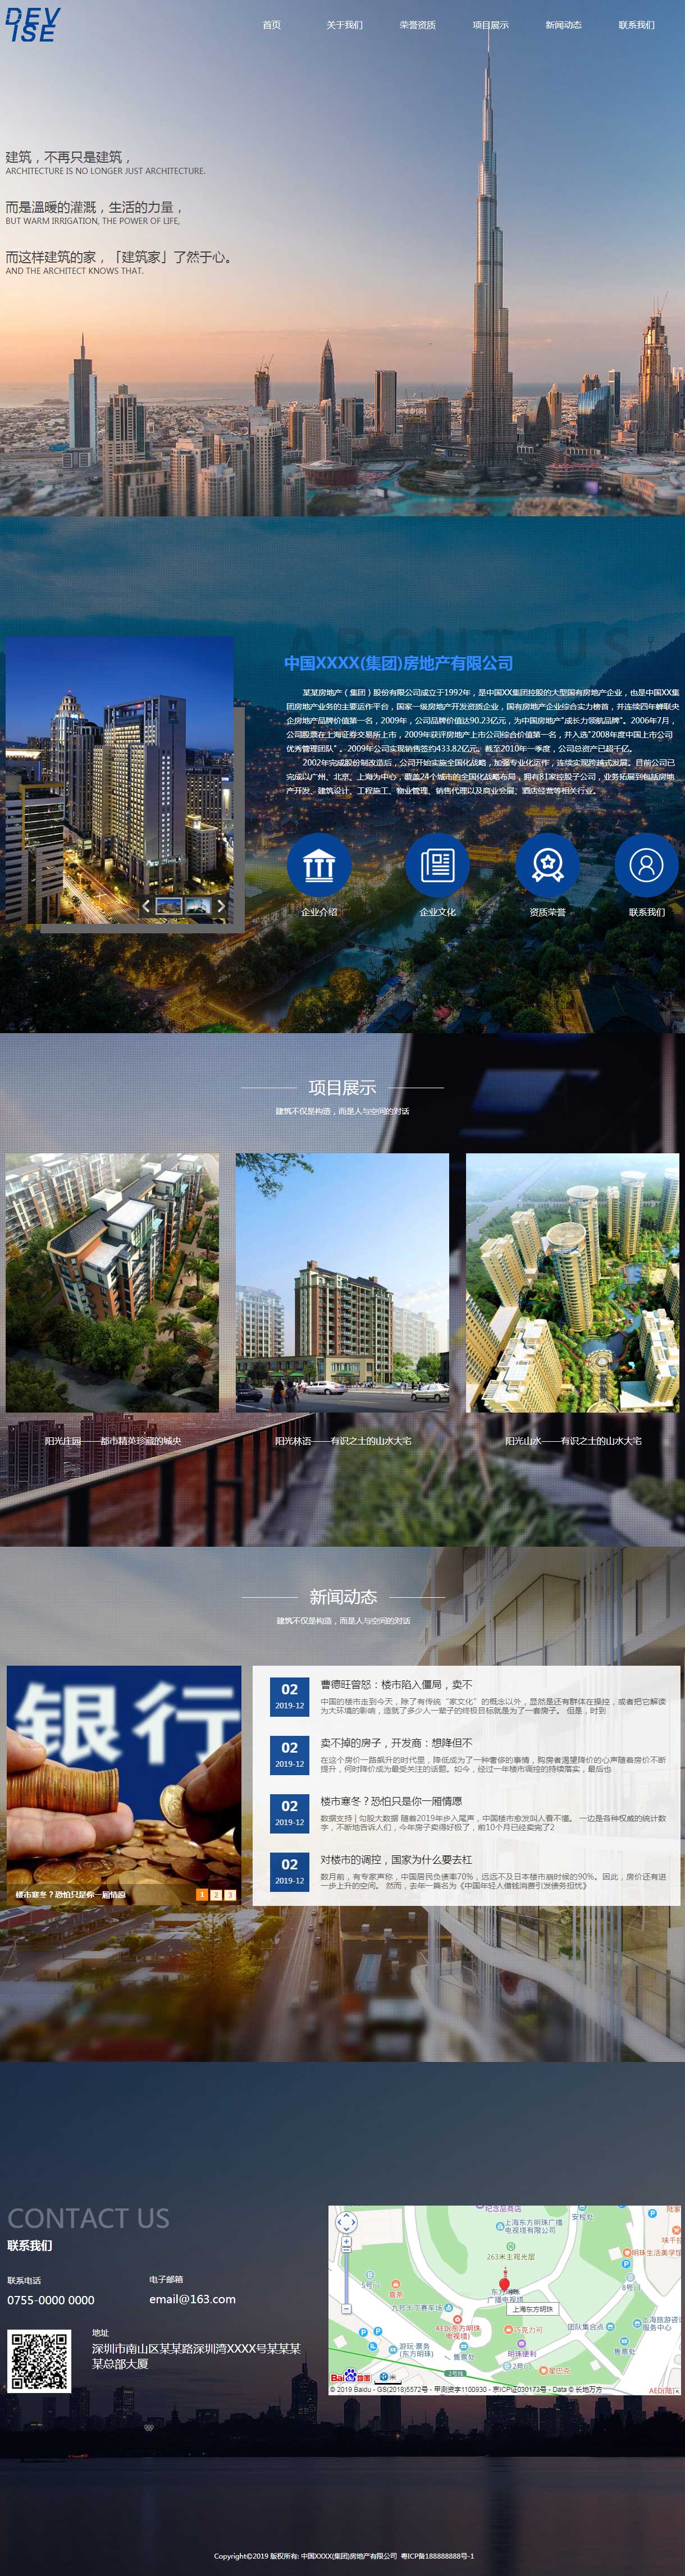 房地产网站模板-real-estate-1073724